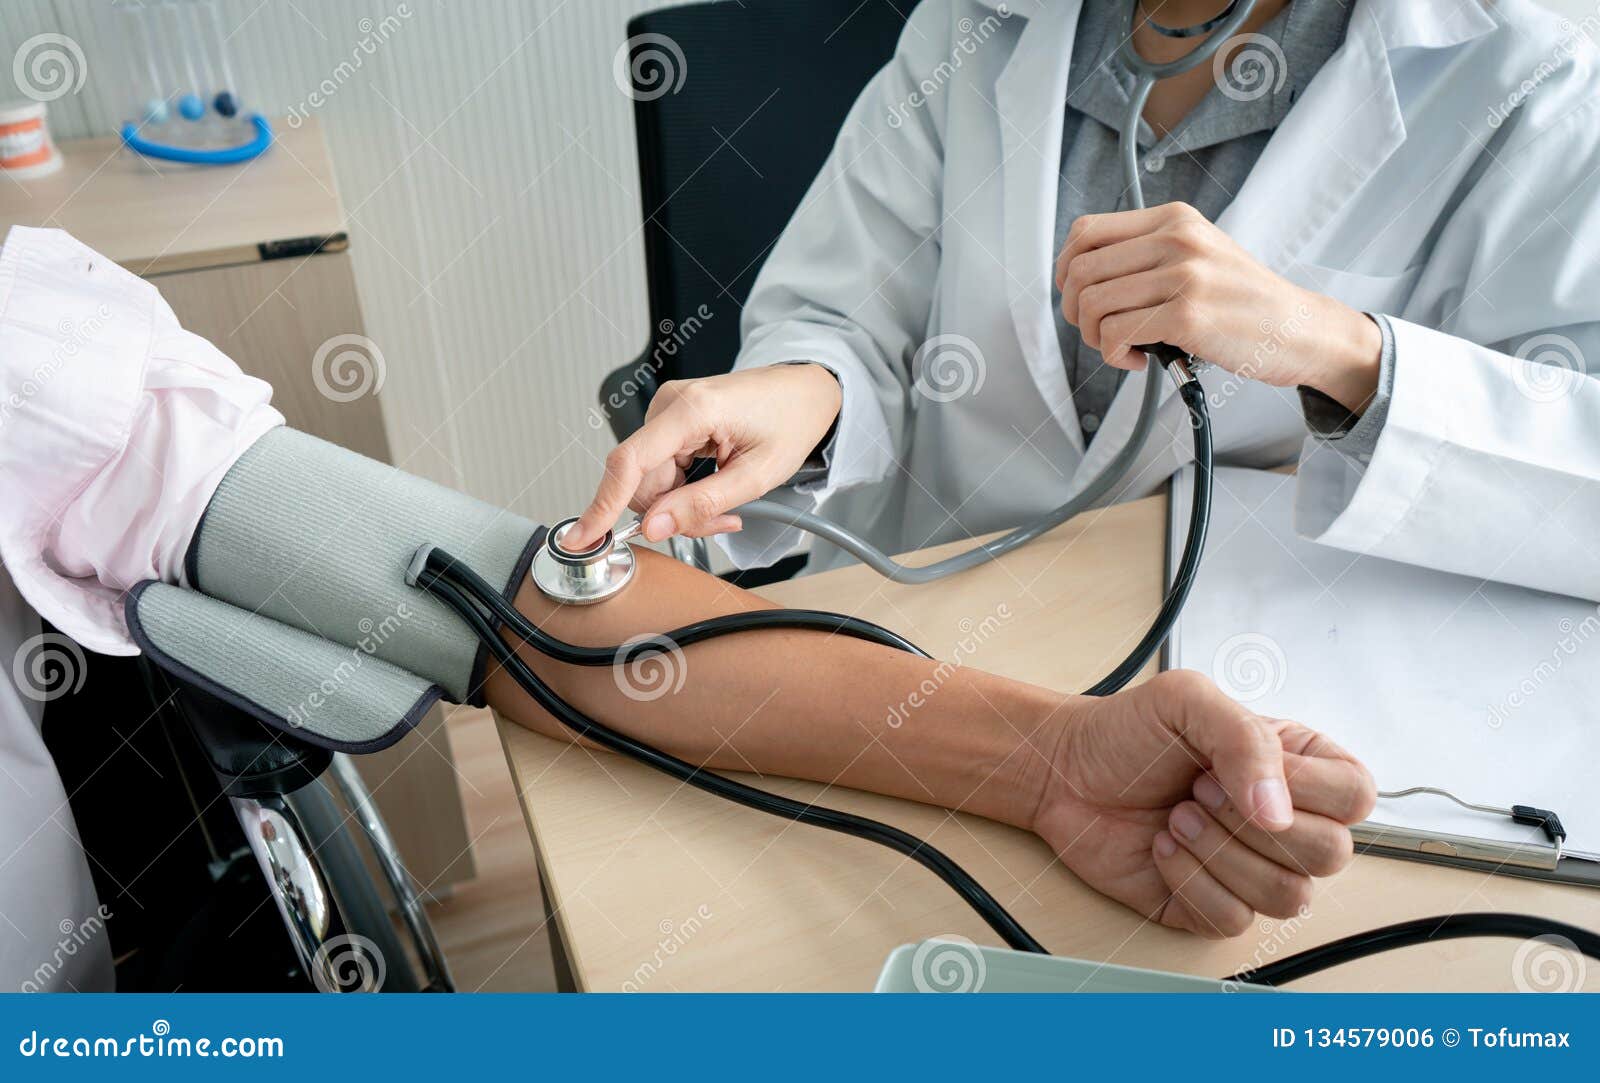 doctor using sphygmomanometer checking blood pressure